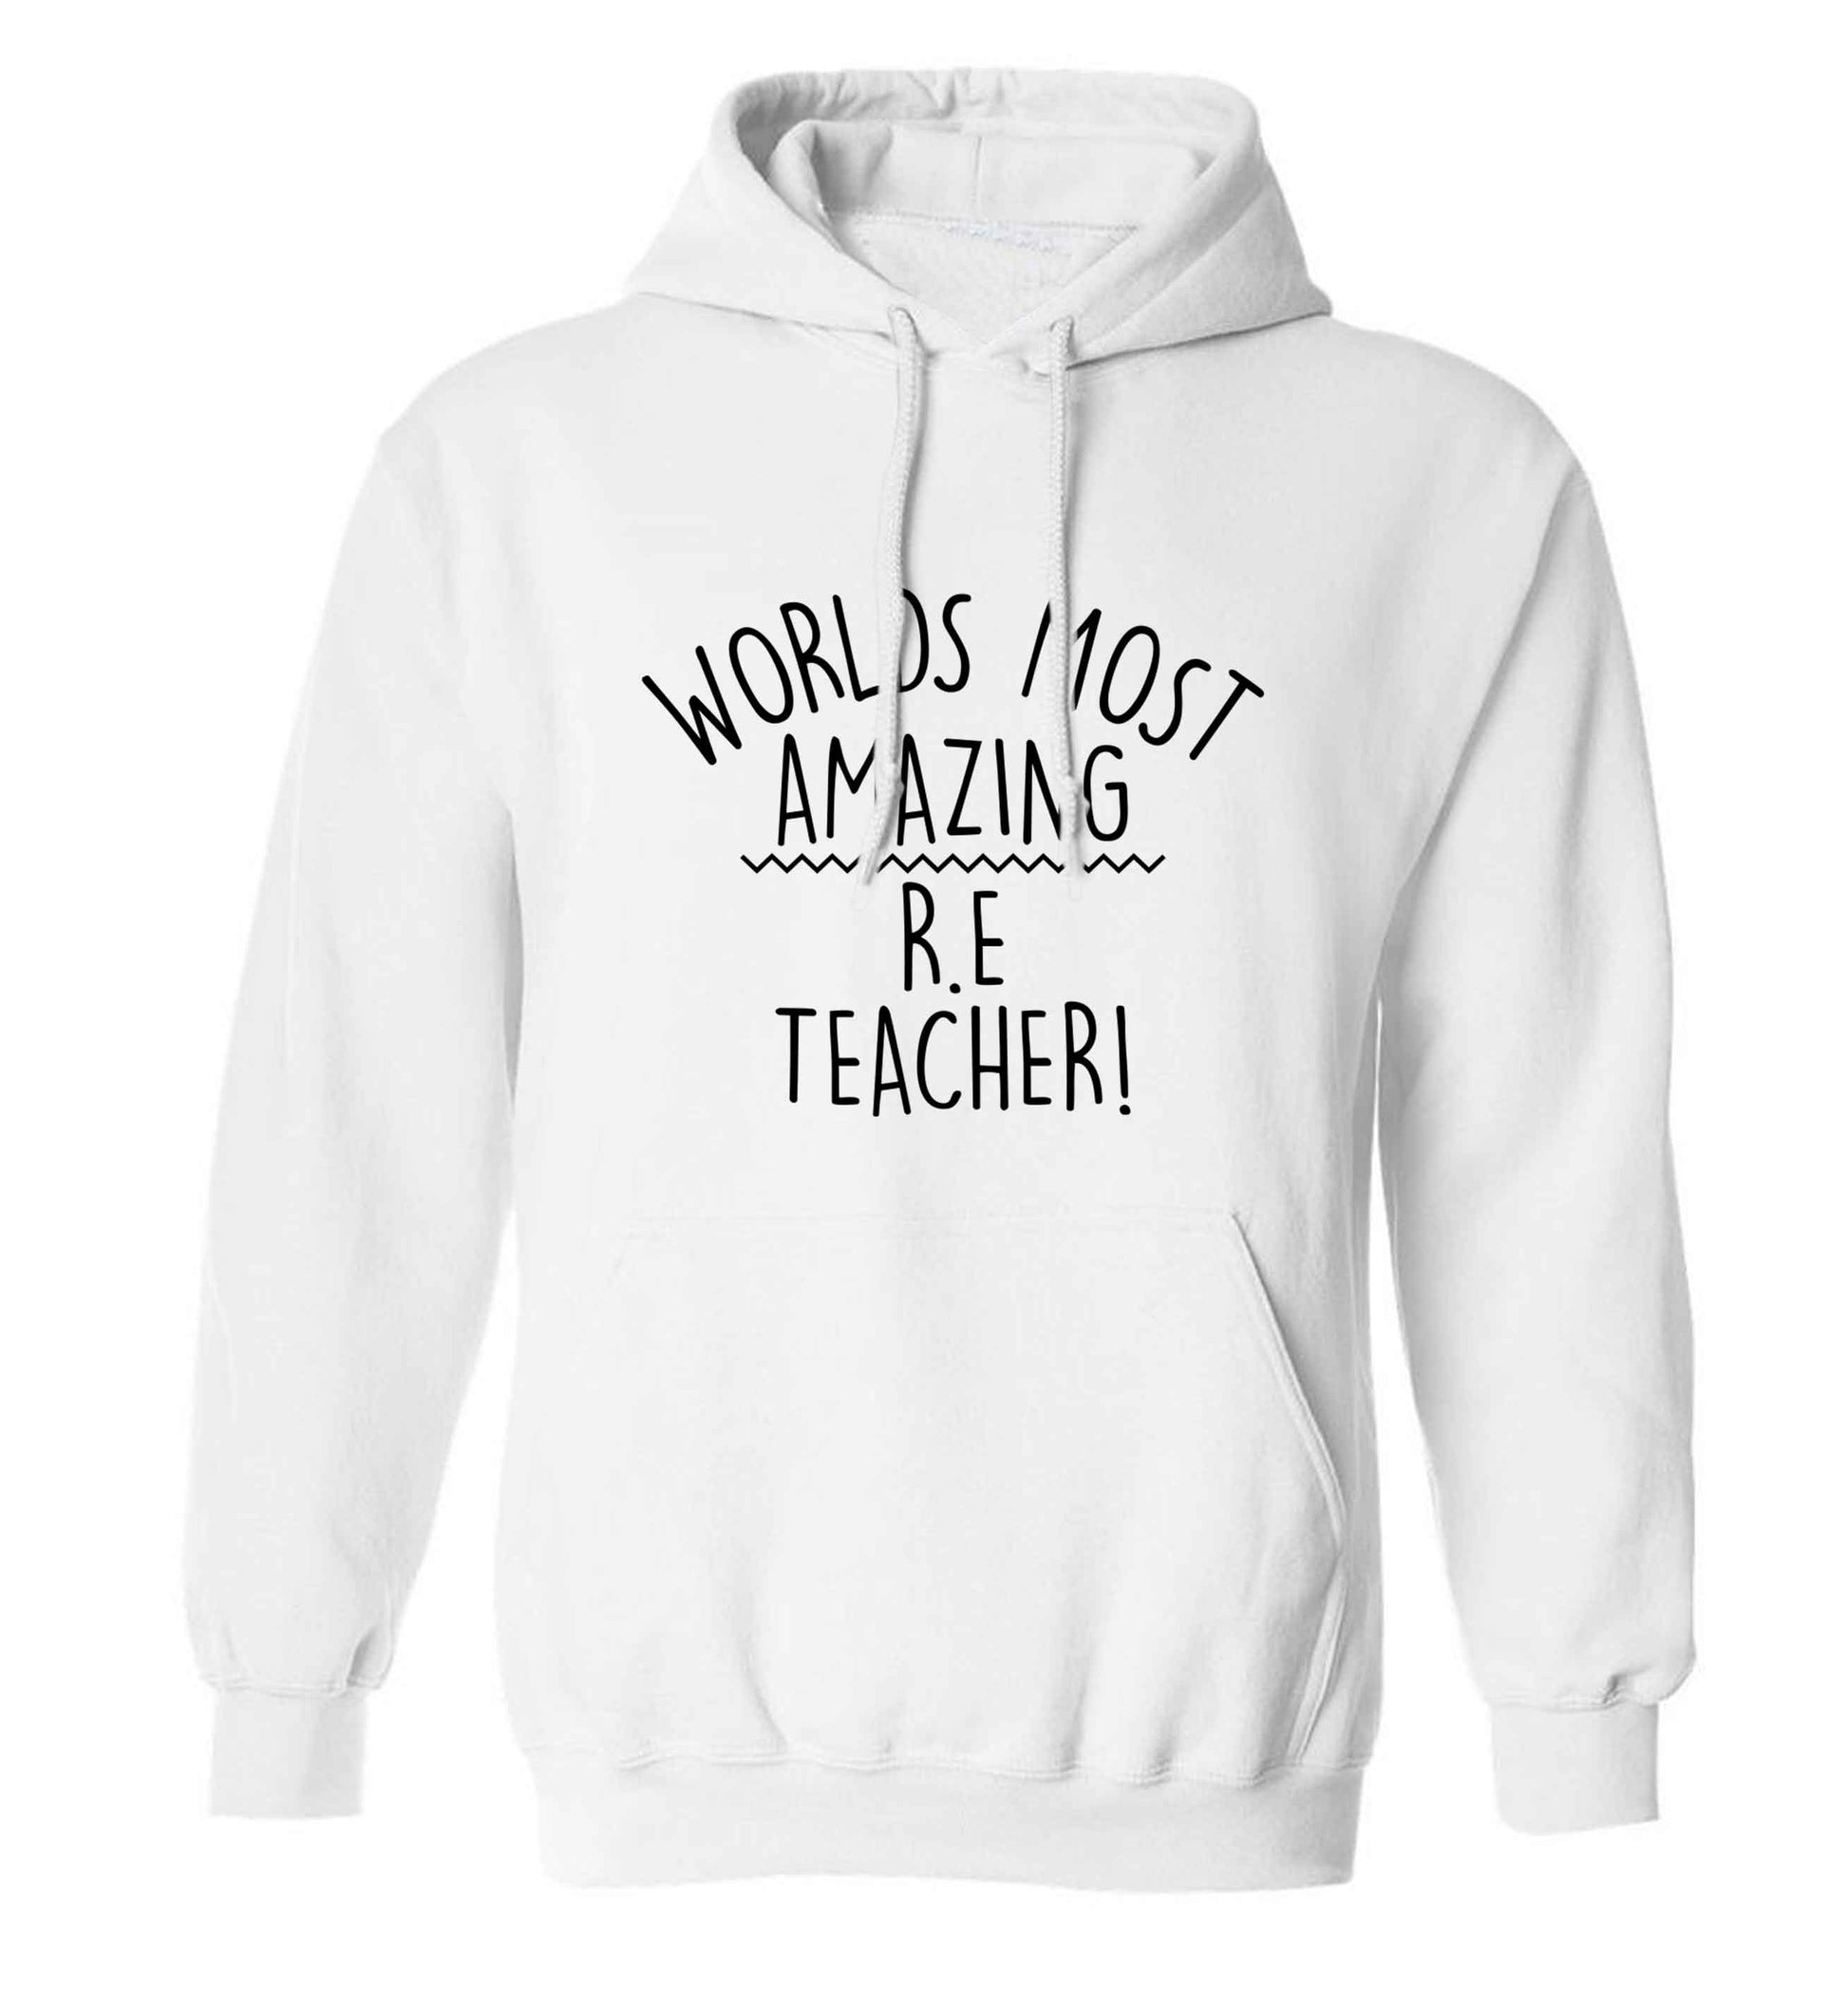 Worlds most amazing R.E teacher adults unisex white hoodie 2XL